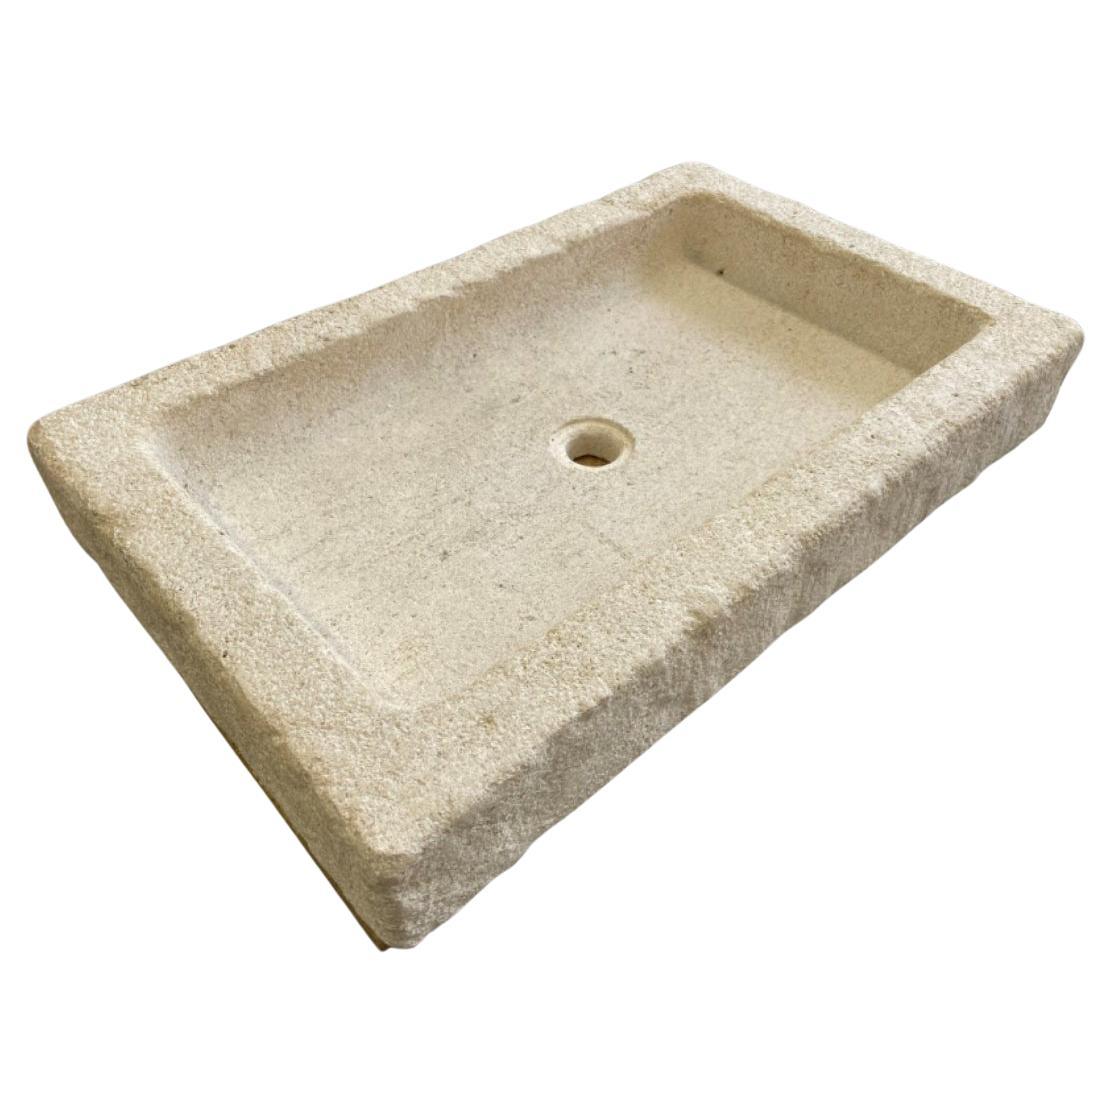 Limestone Stone Sink Basin For Sale